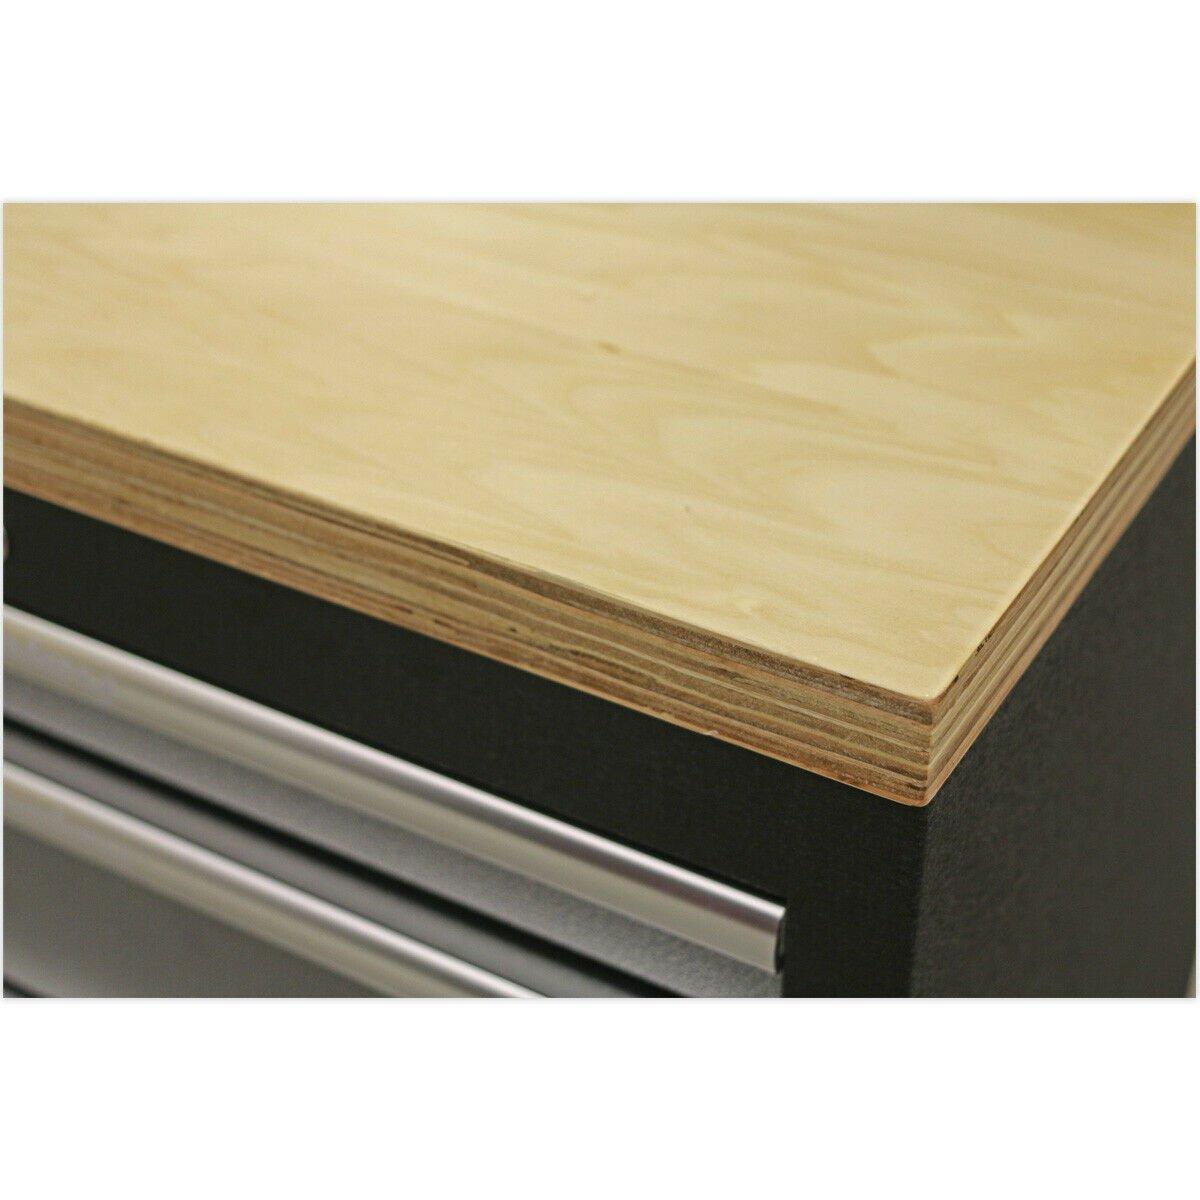 1360mm Pressed Wood Worktop for ys02633 ys02634 ys02639 & ys02641 Cabinets